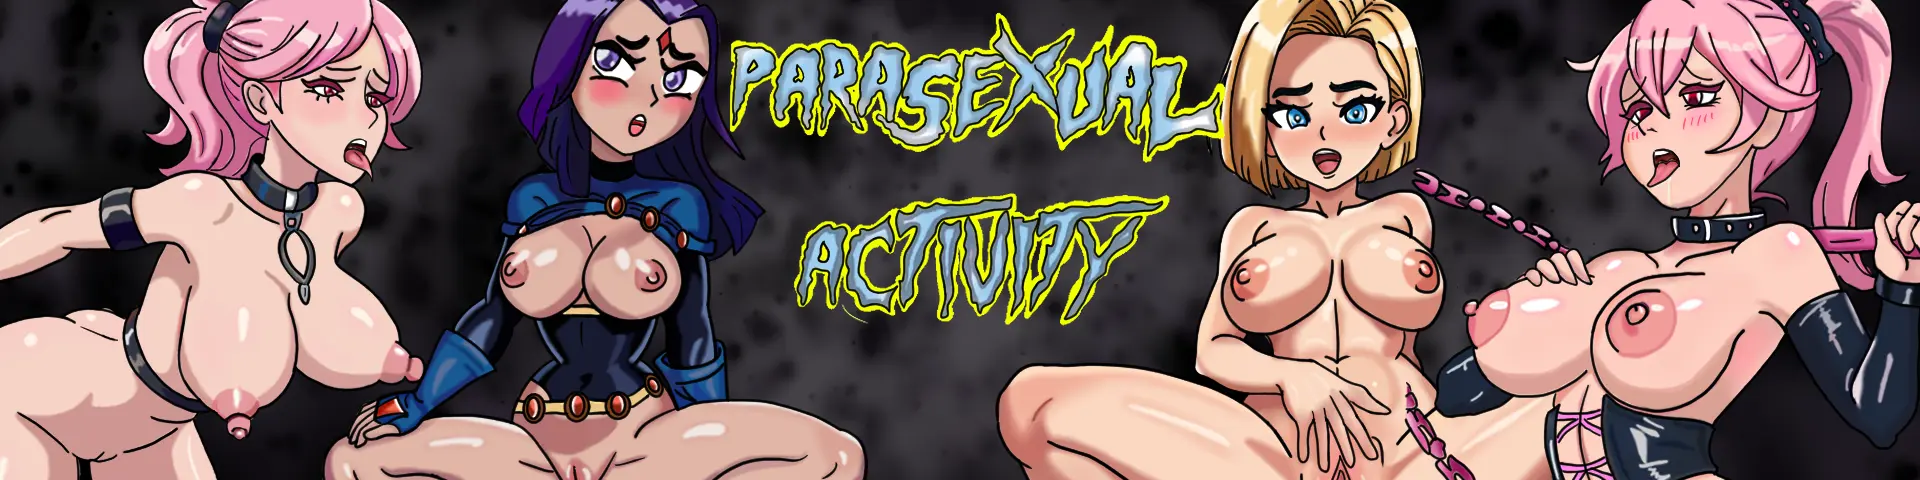 Kinky Ghosty : Parasexual Activity main image